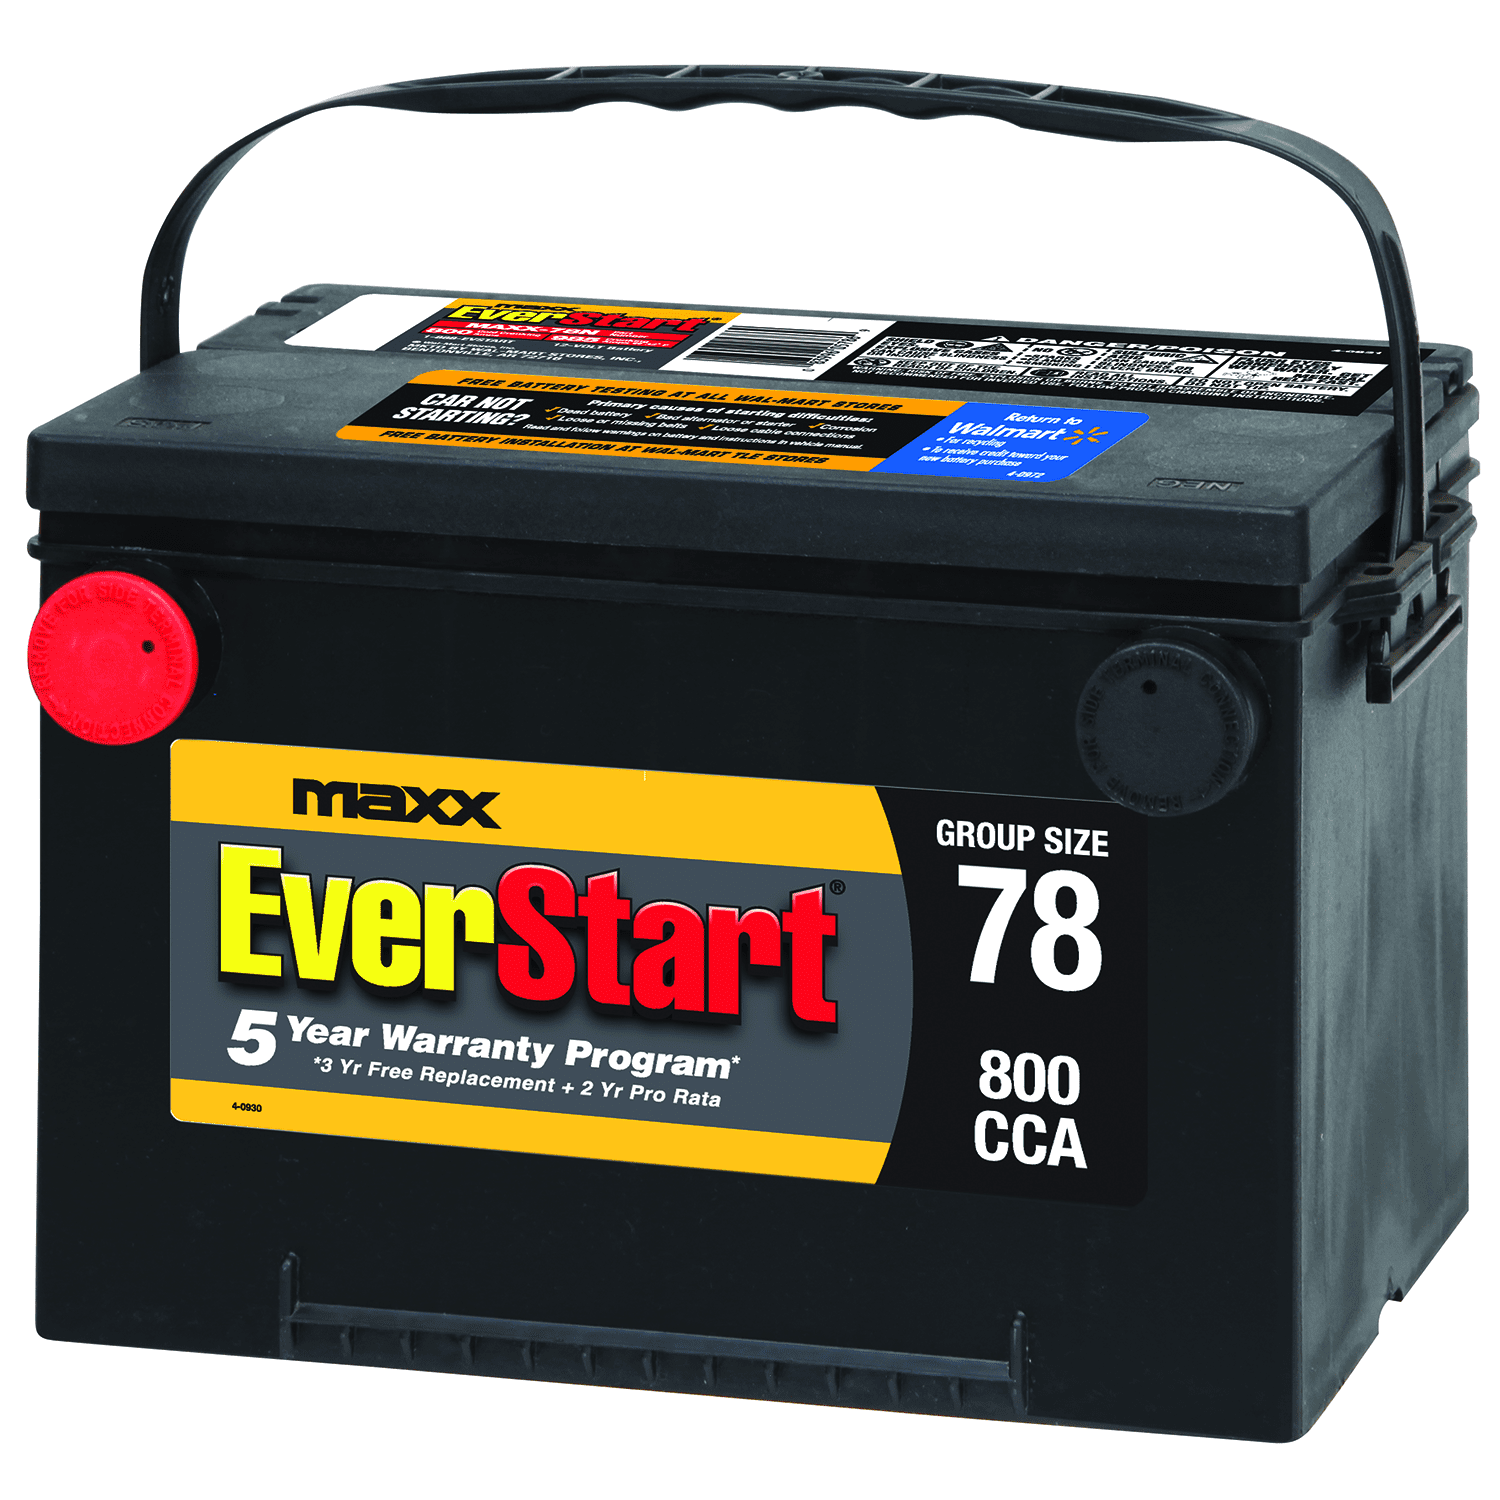 everstart-maxx-lead-acid-automotive-battery-group-78n-walmart